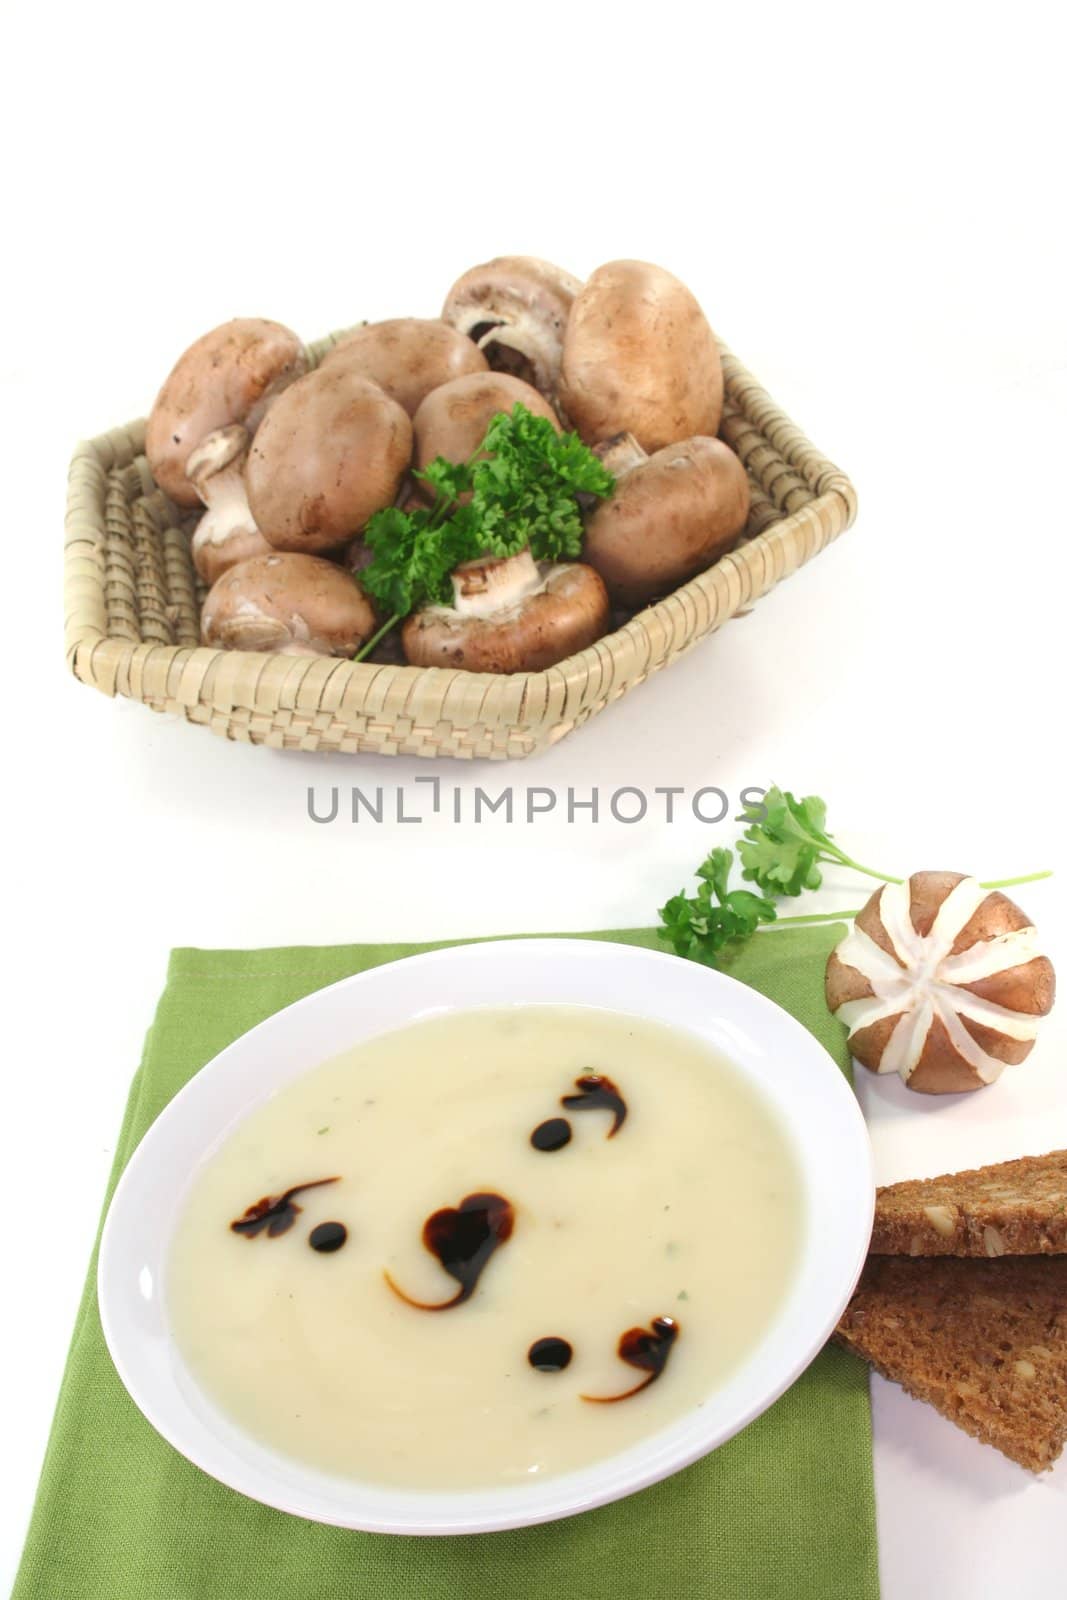 Cream of mushroom soup with fresh mushrooms, bread and parsley